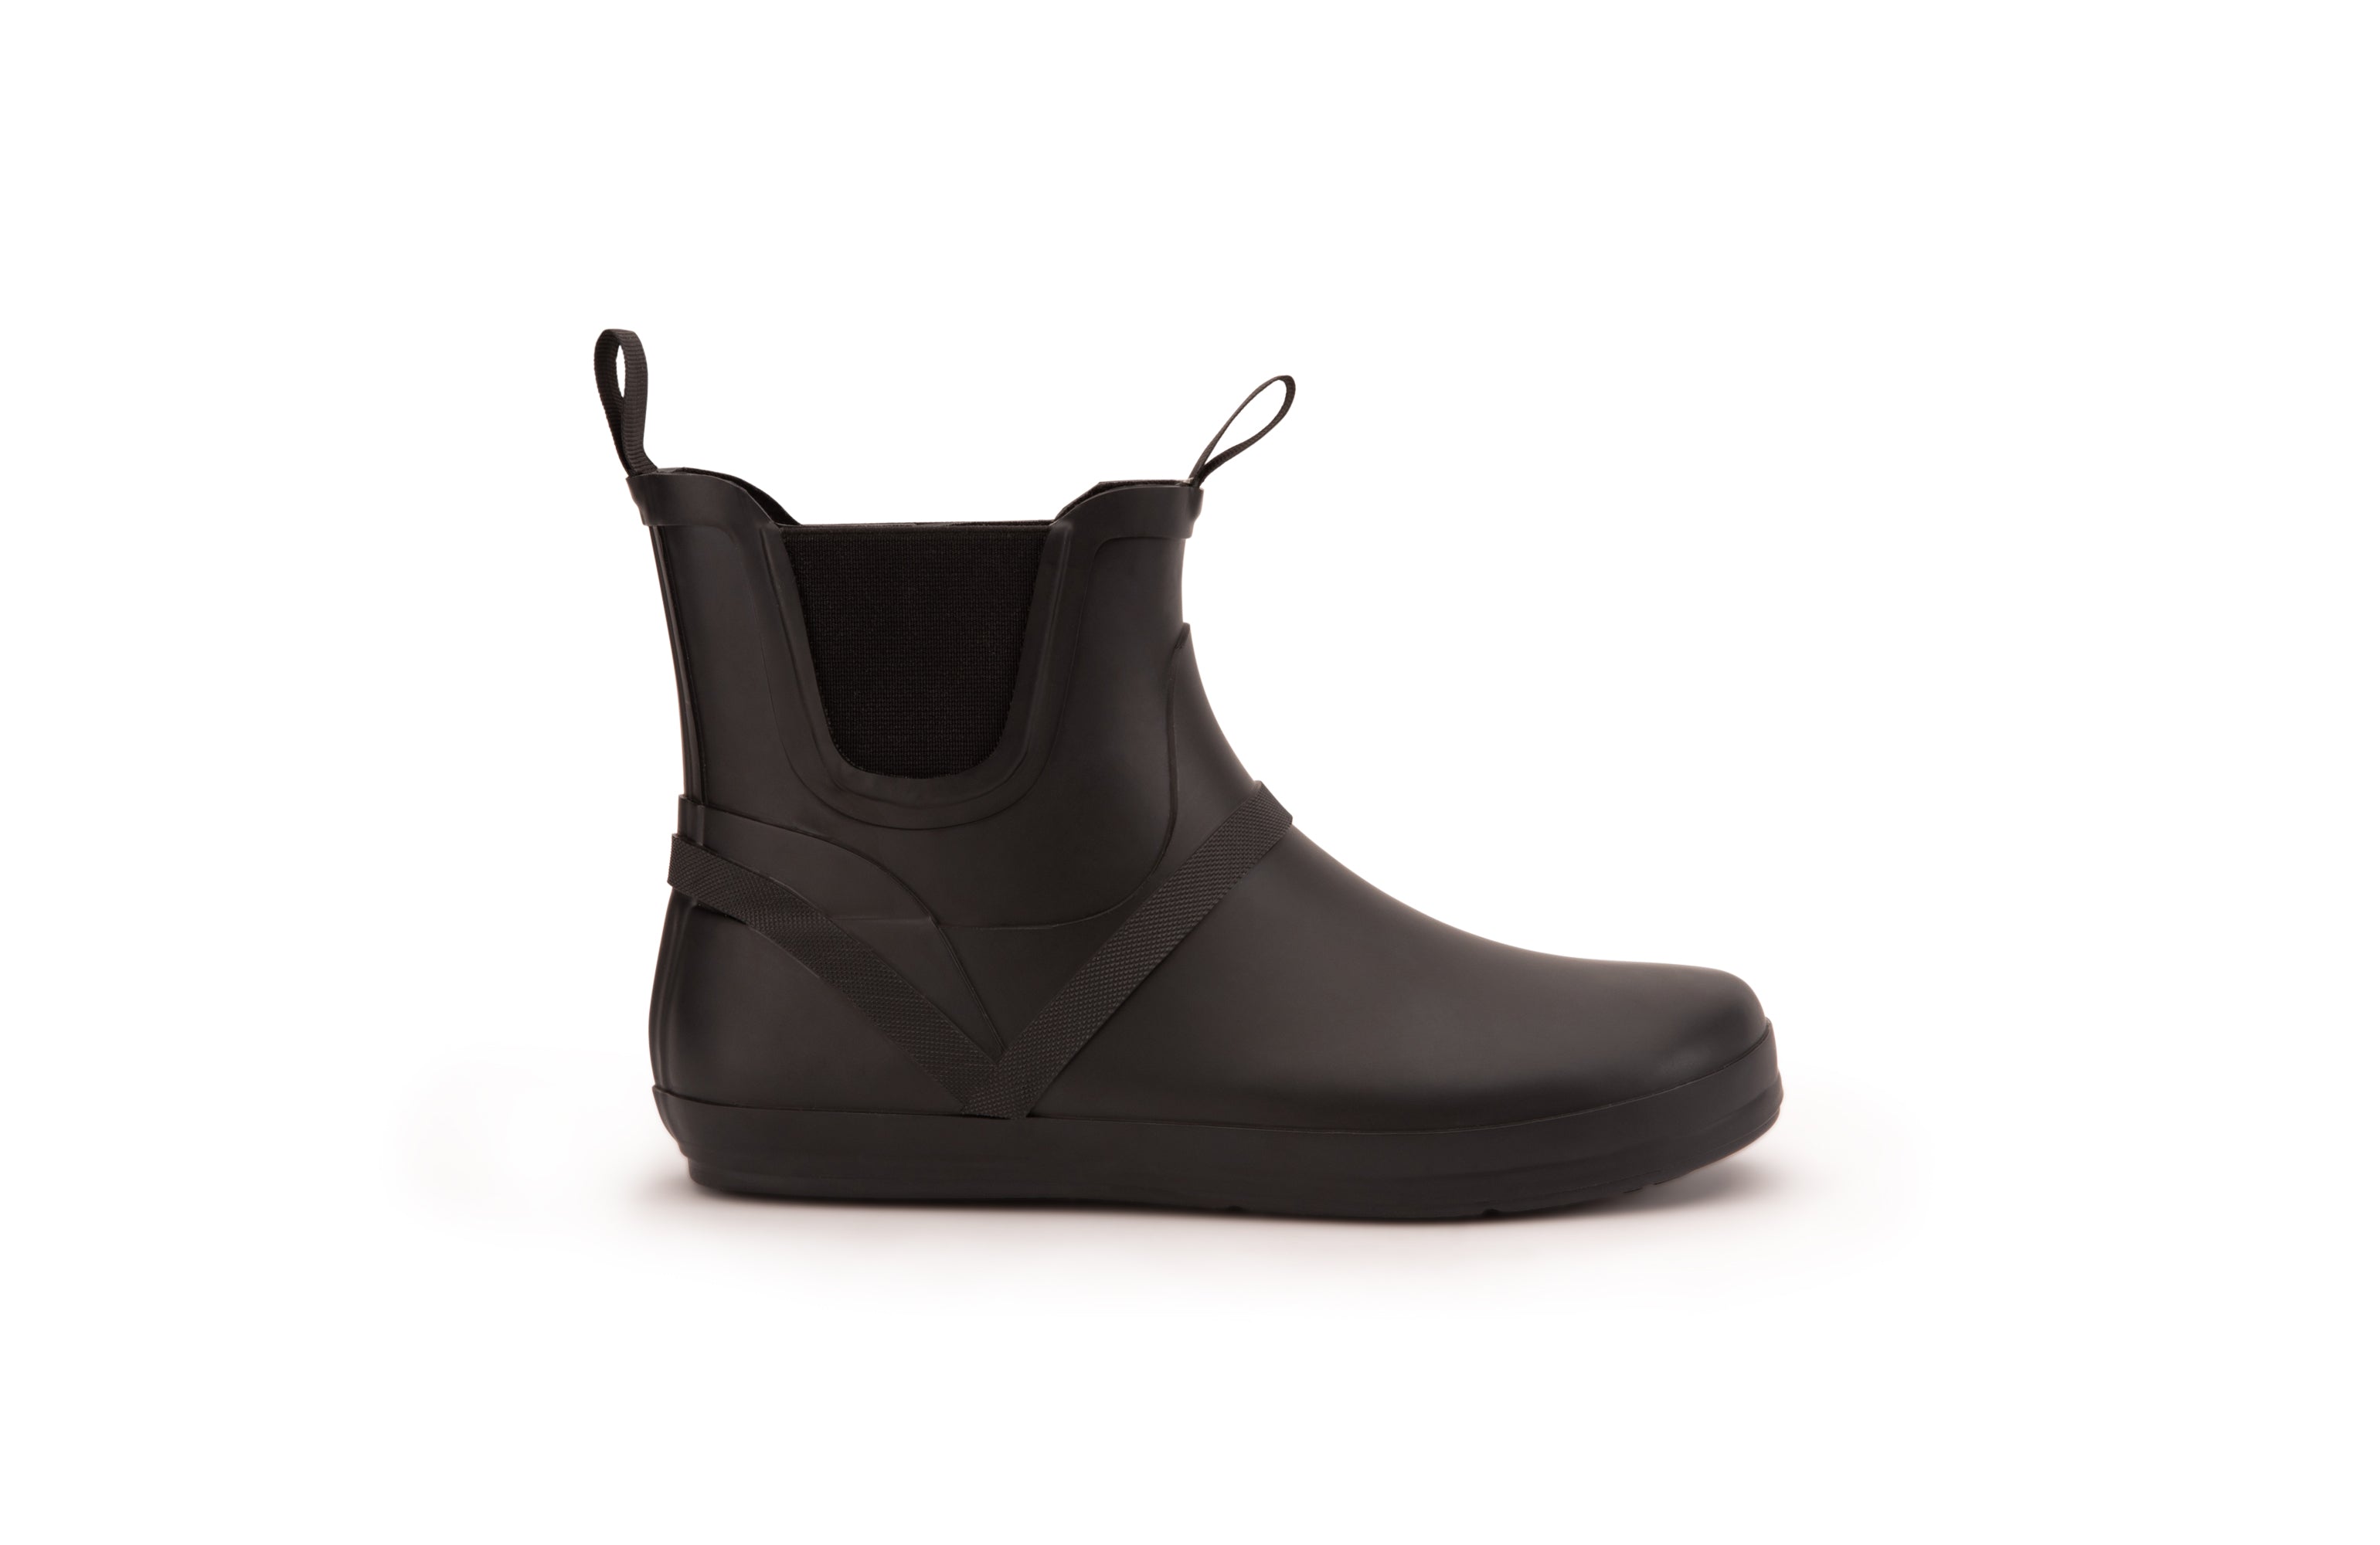 Xero Shoes Gracie barfods gummistøvler til kvinder i farven black, yderside